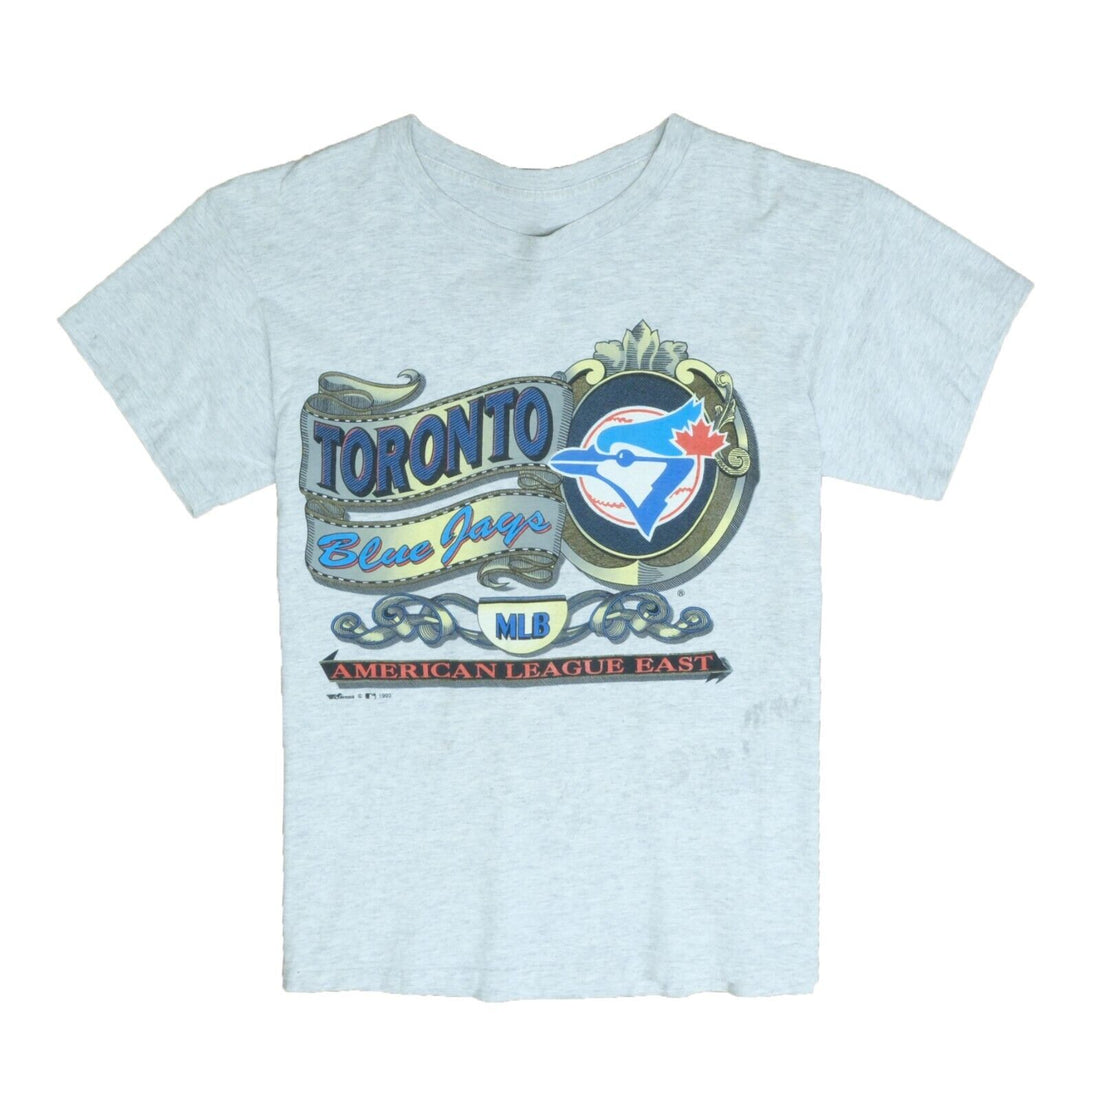 Vintage Toronto Blue Jays Ravens Athletic T-Shirt Size Medium 90s MLB